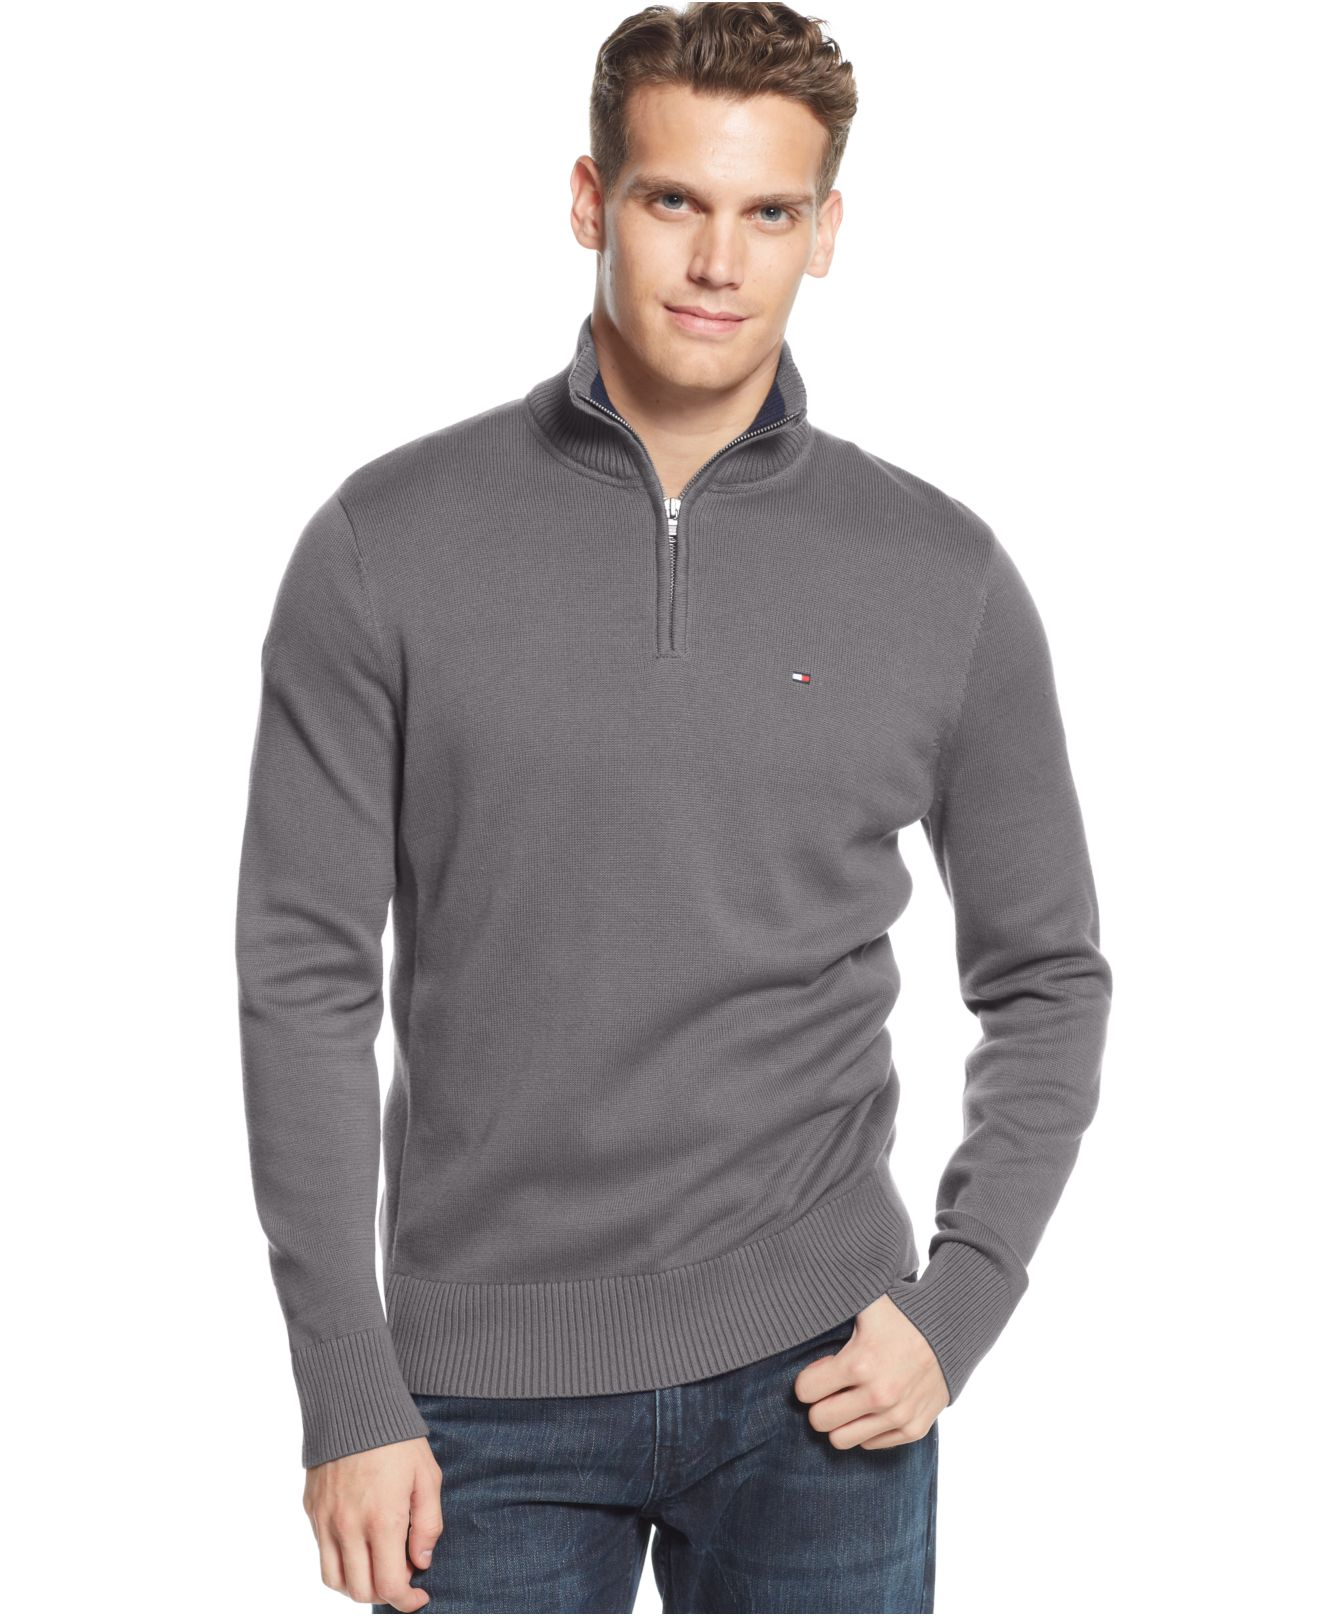 Lyst - Tommy Hilfiger Mclaughlan Half-Zip Sweater in Gray for Men